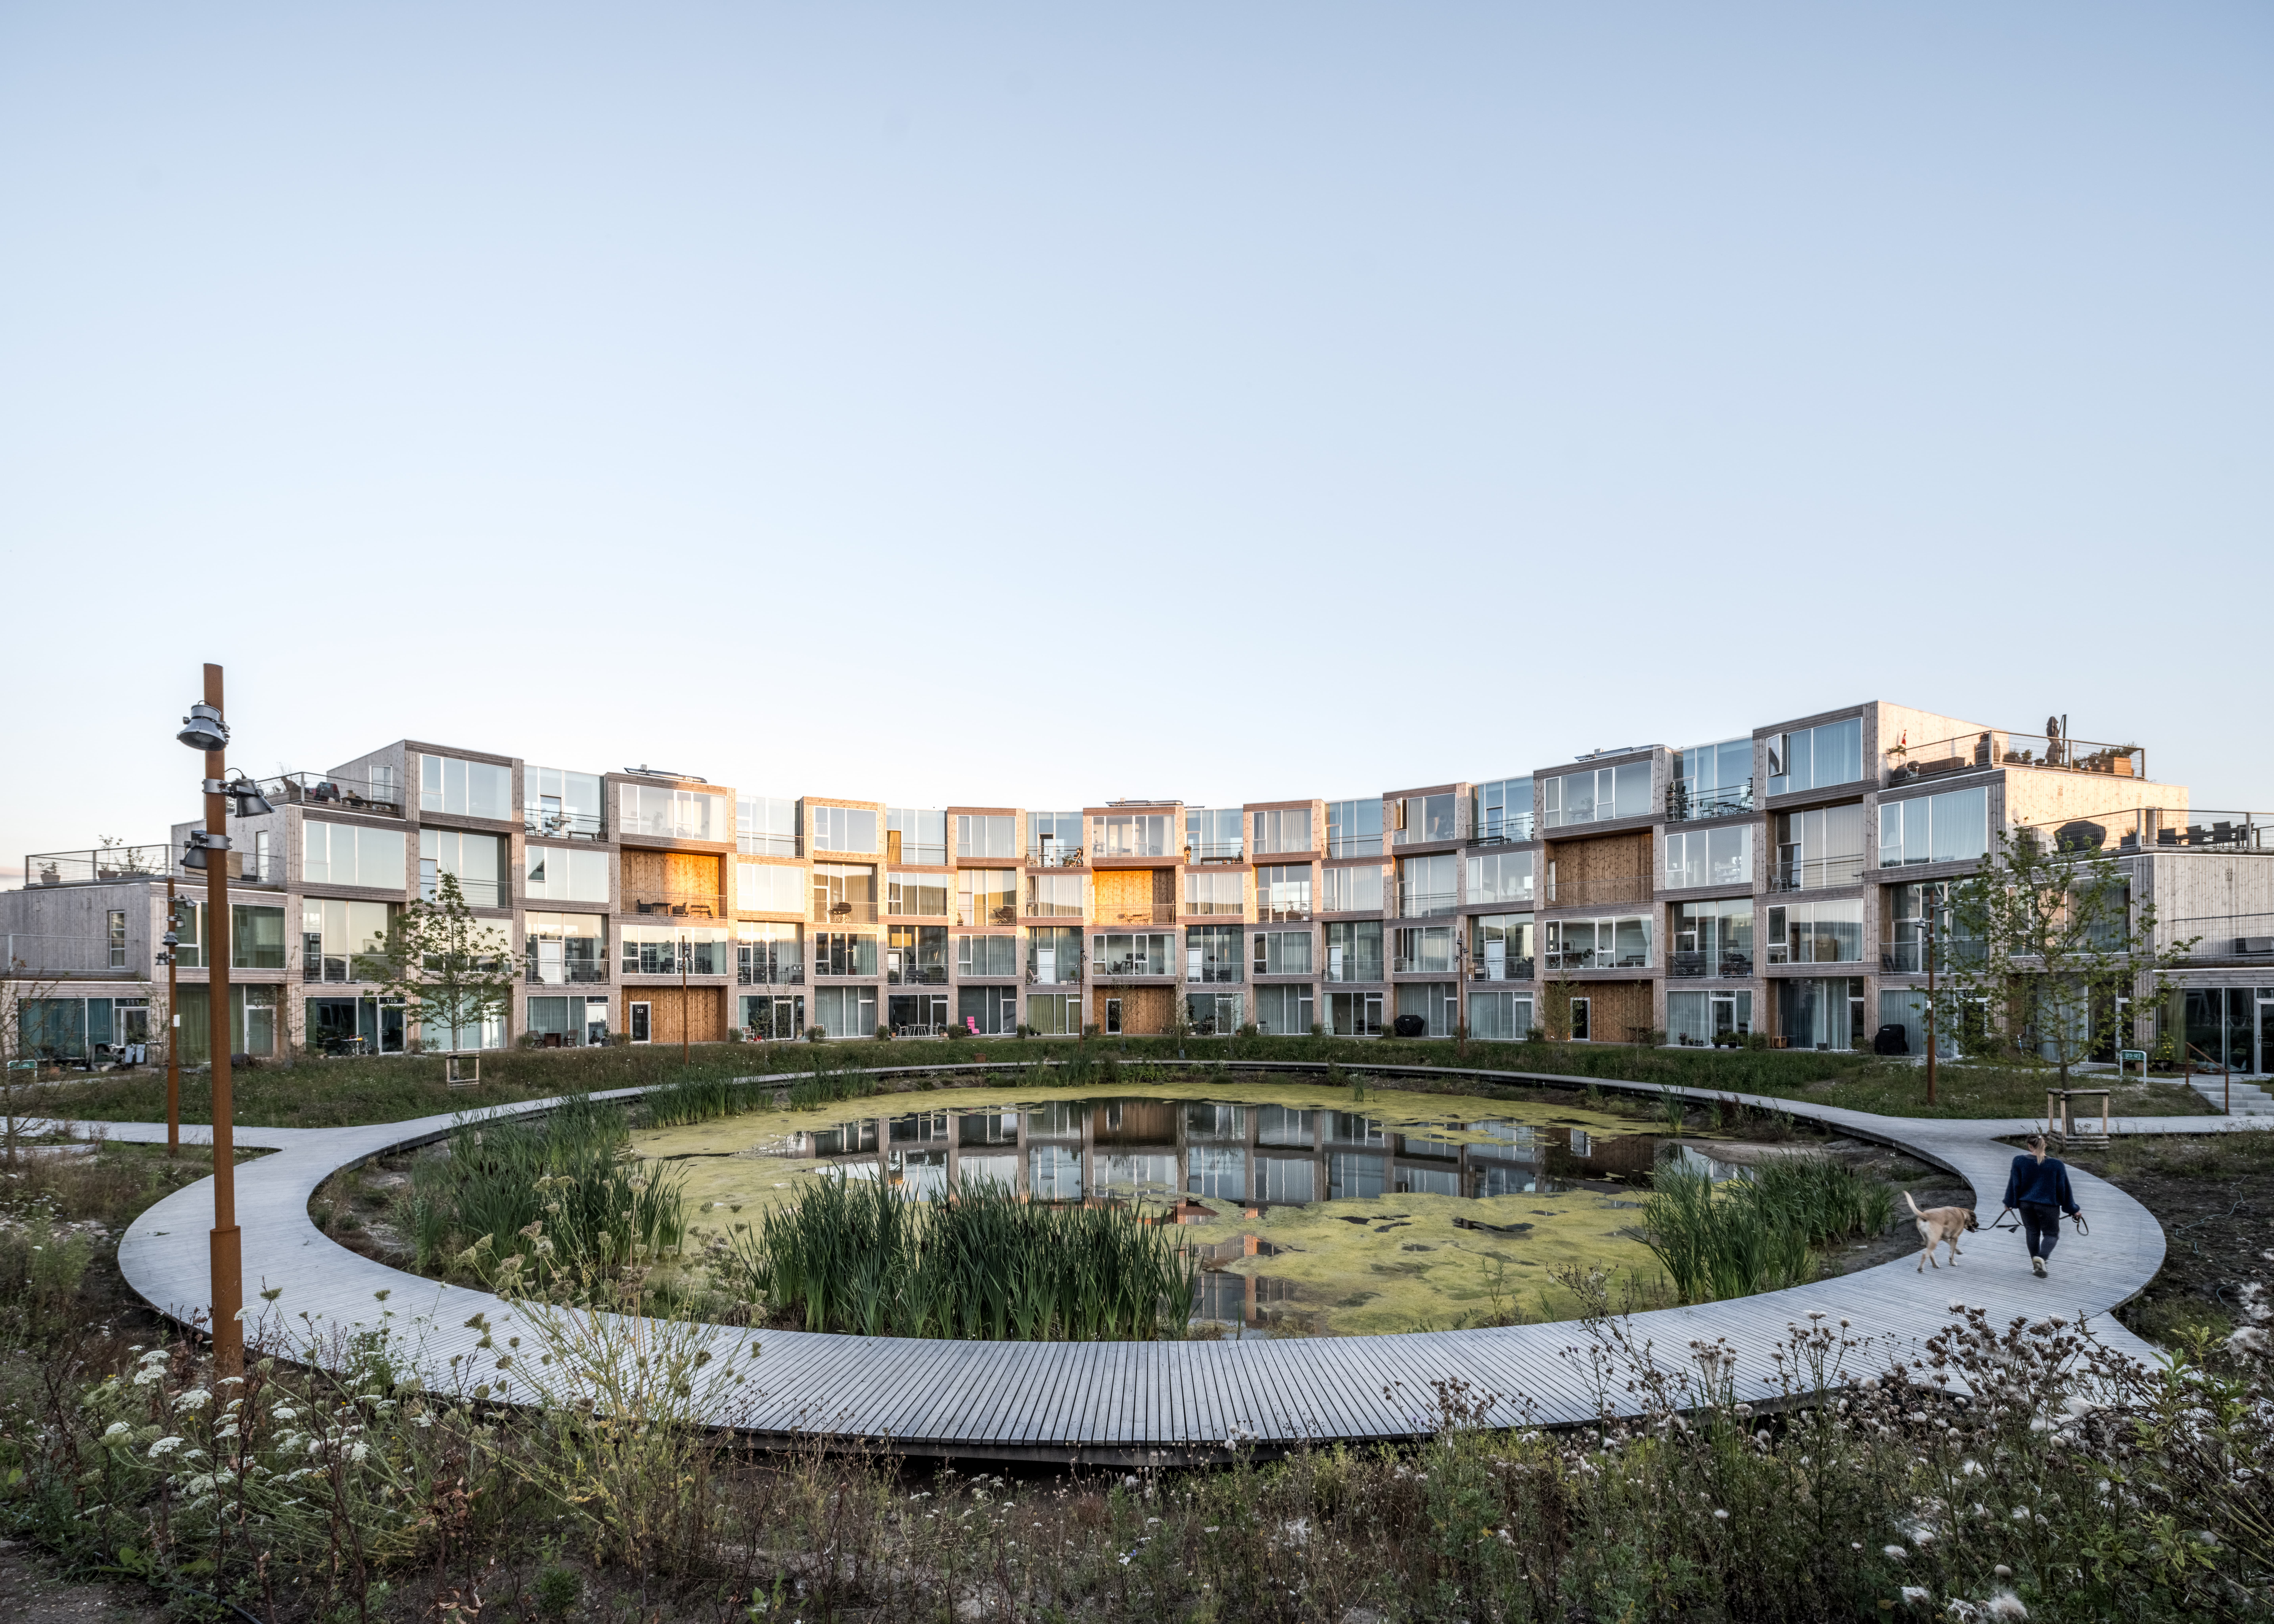 Sneglehusene: A modular housing development that promotes wellbeing